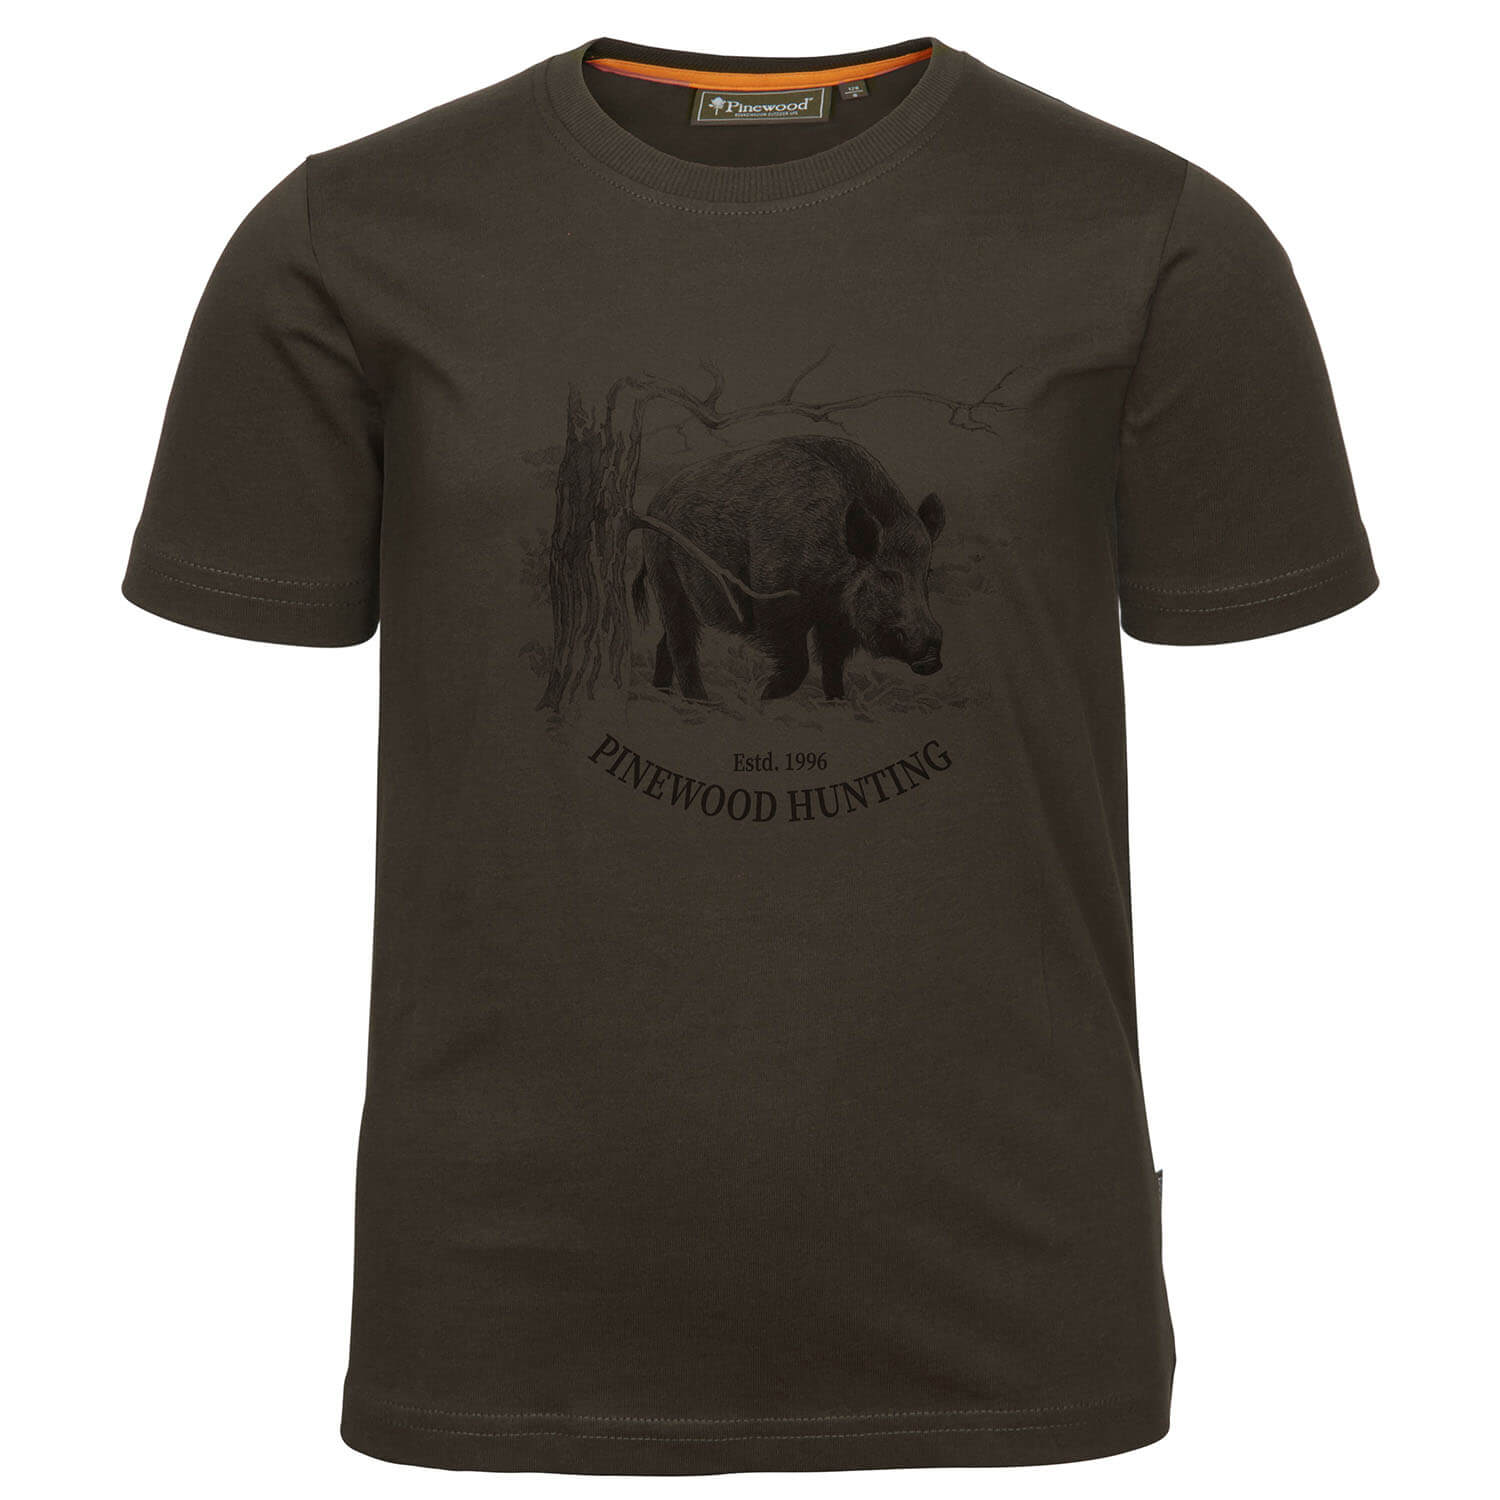  Pinewood T-shirt Wild Zwijn Kinderen - Zomer jachtkleding